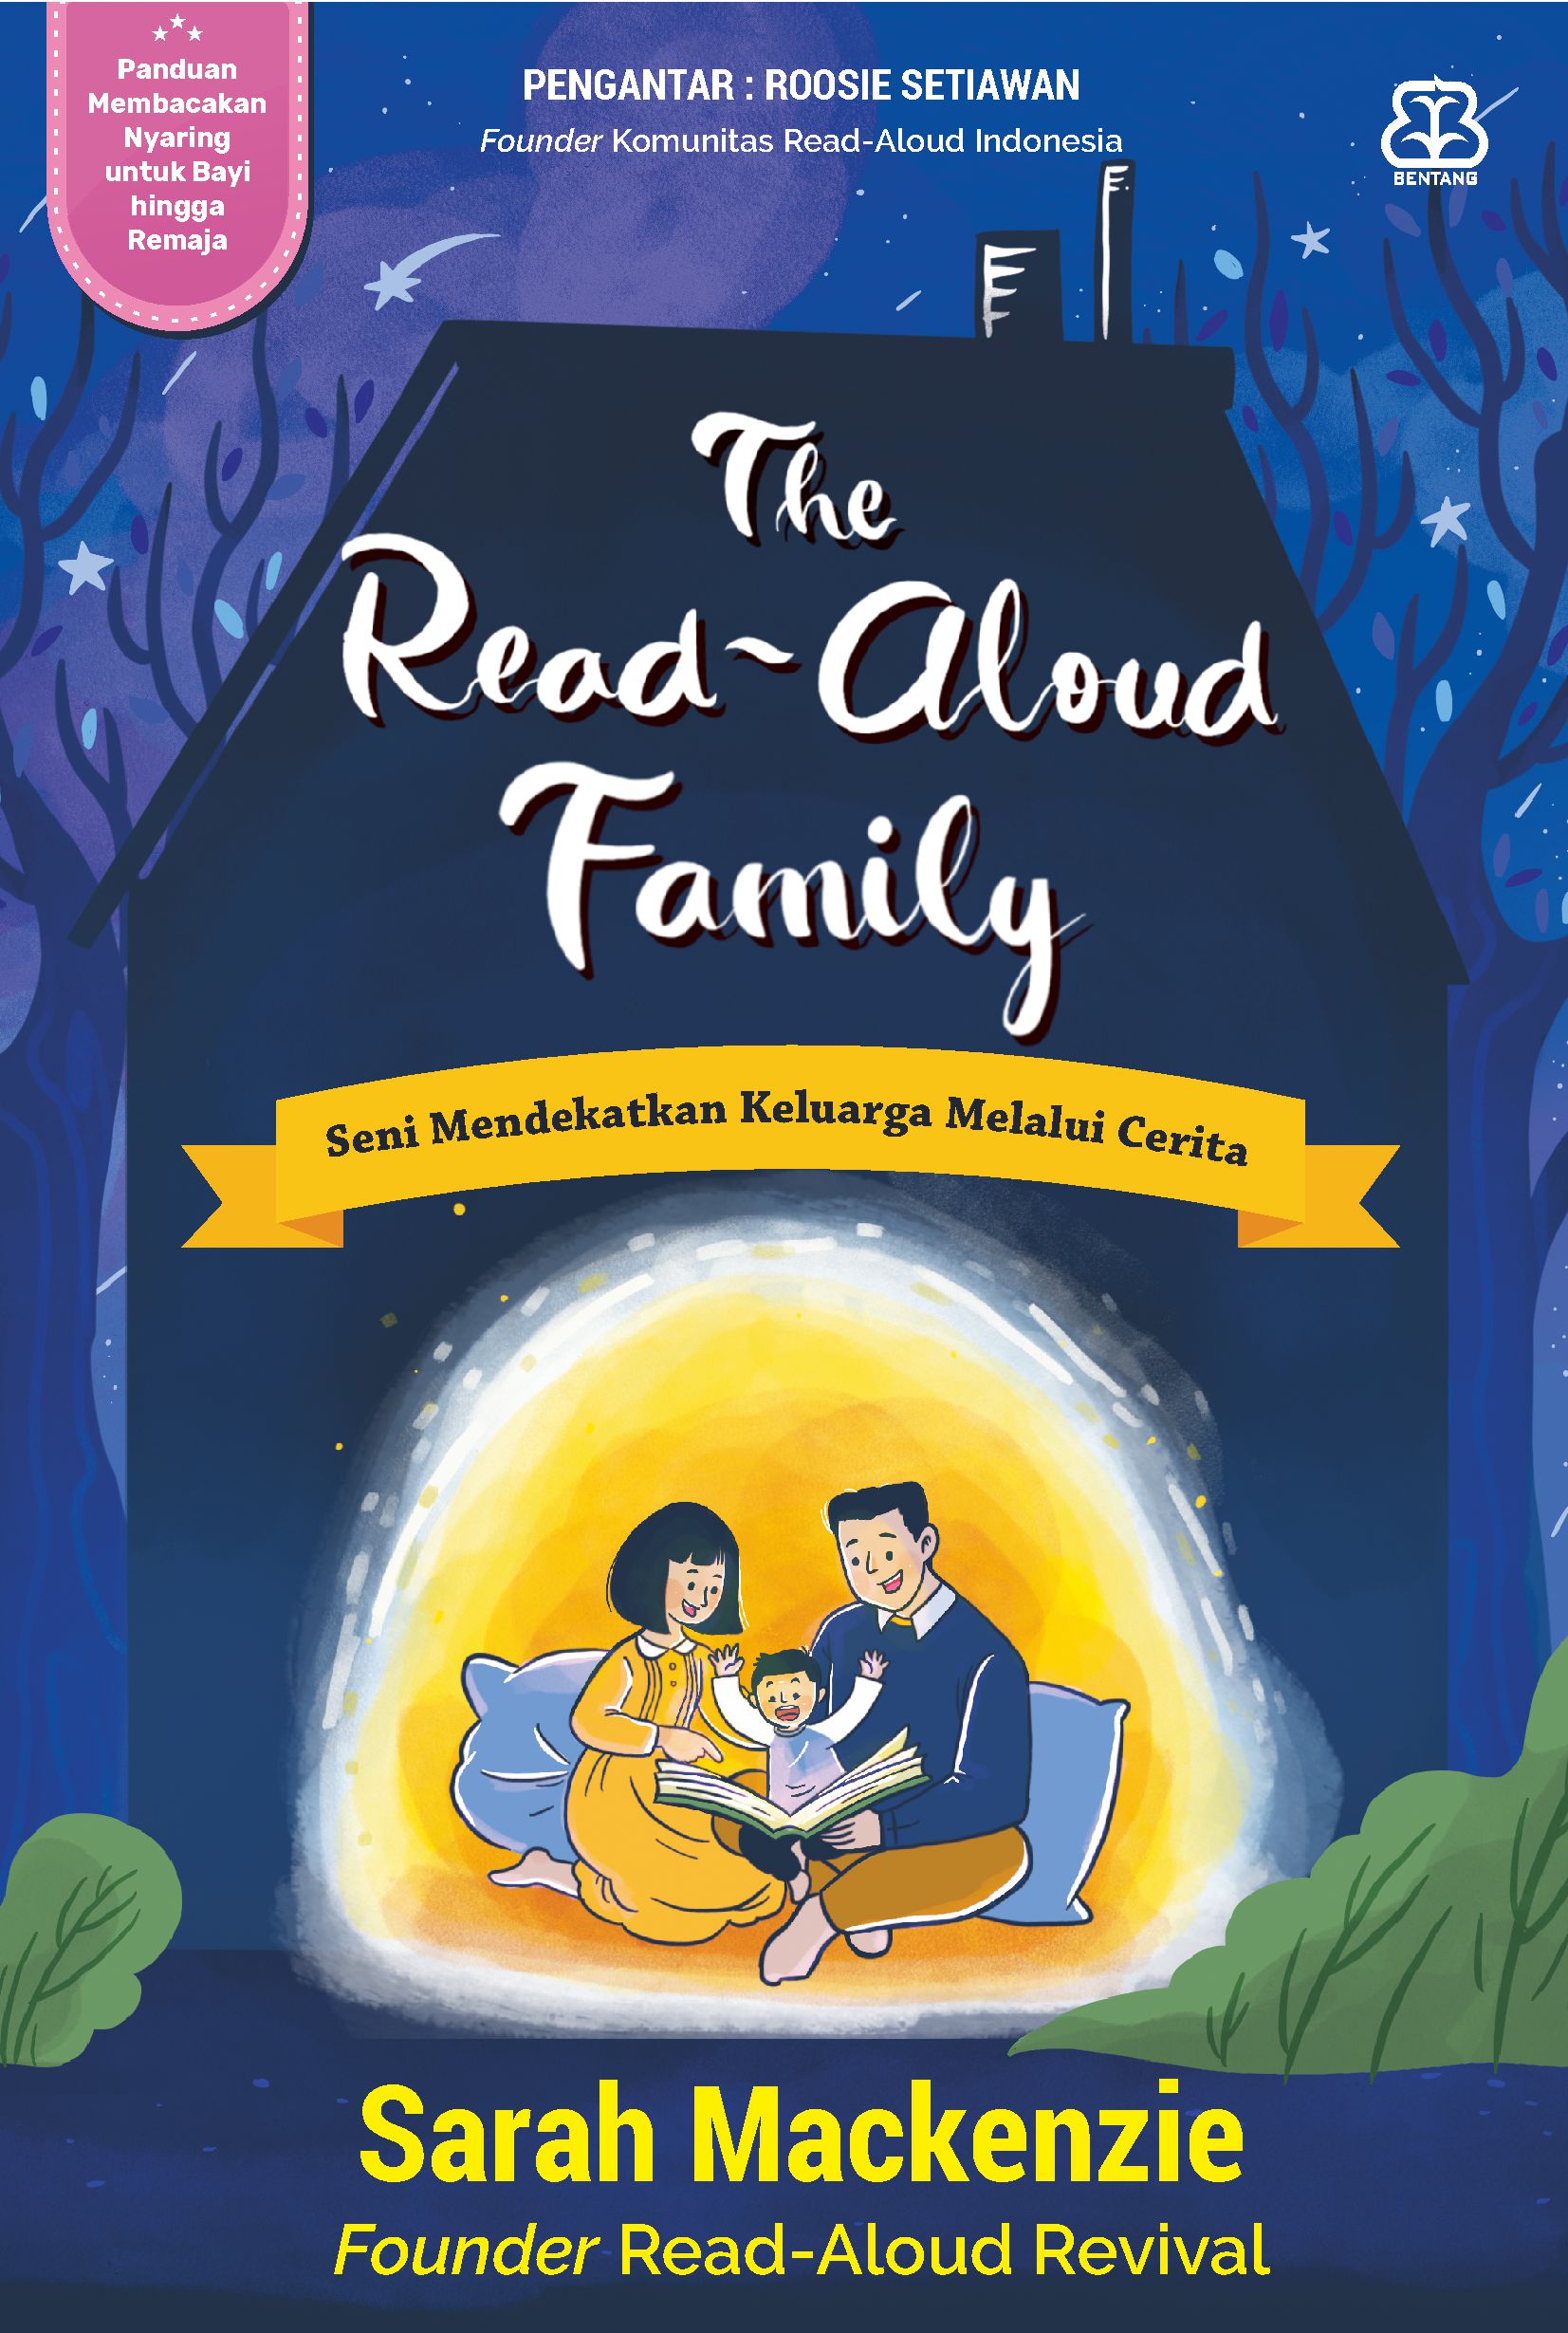 THE READ-ALOUD FAMILY